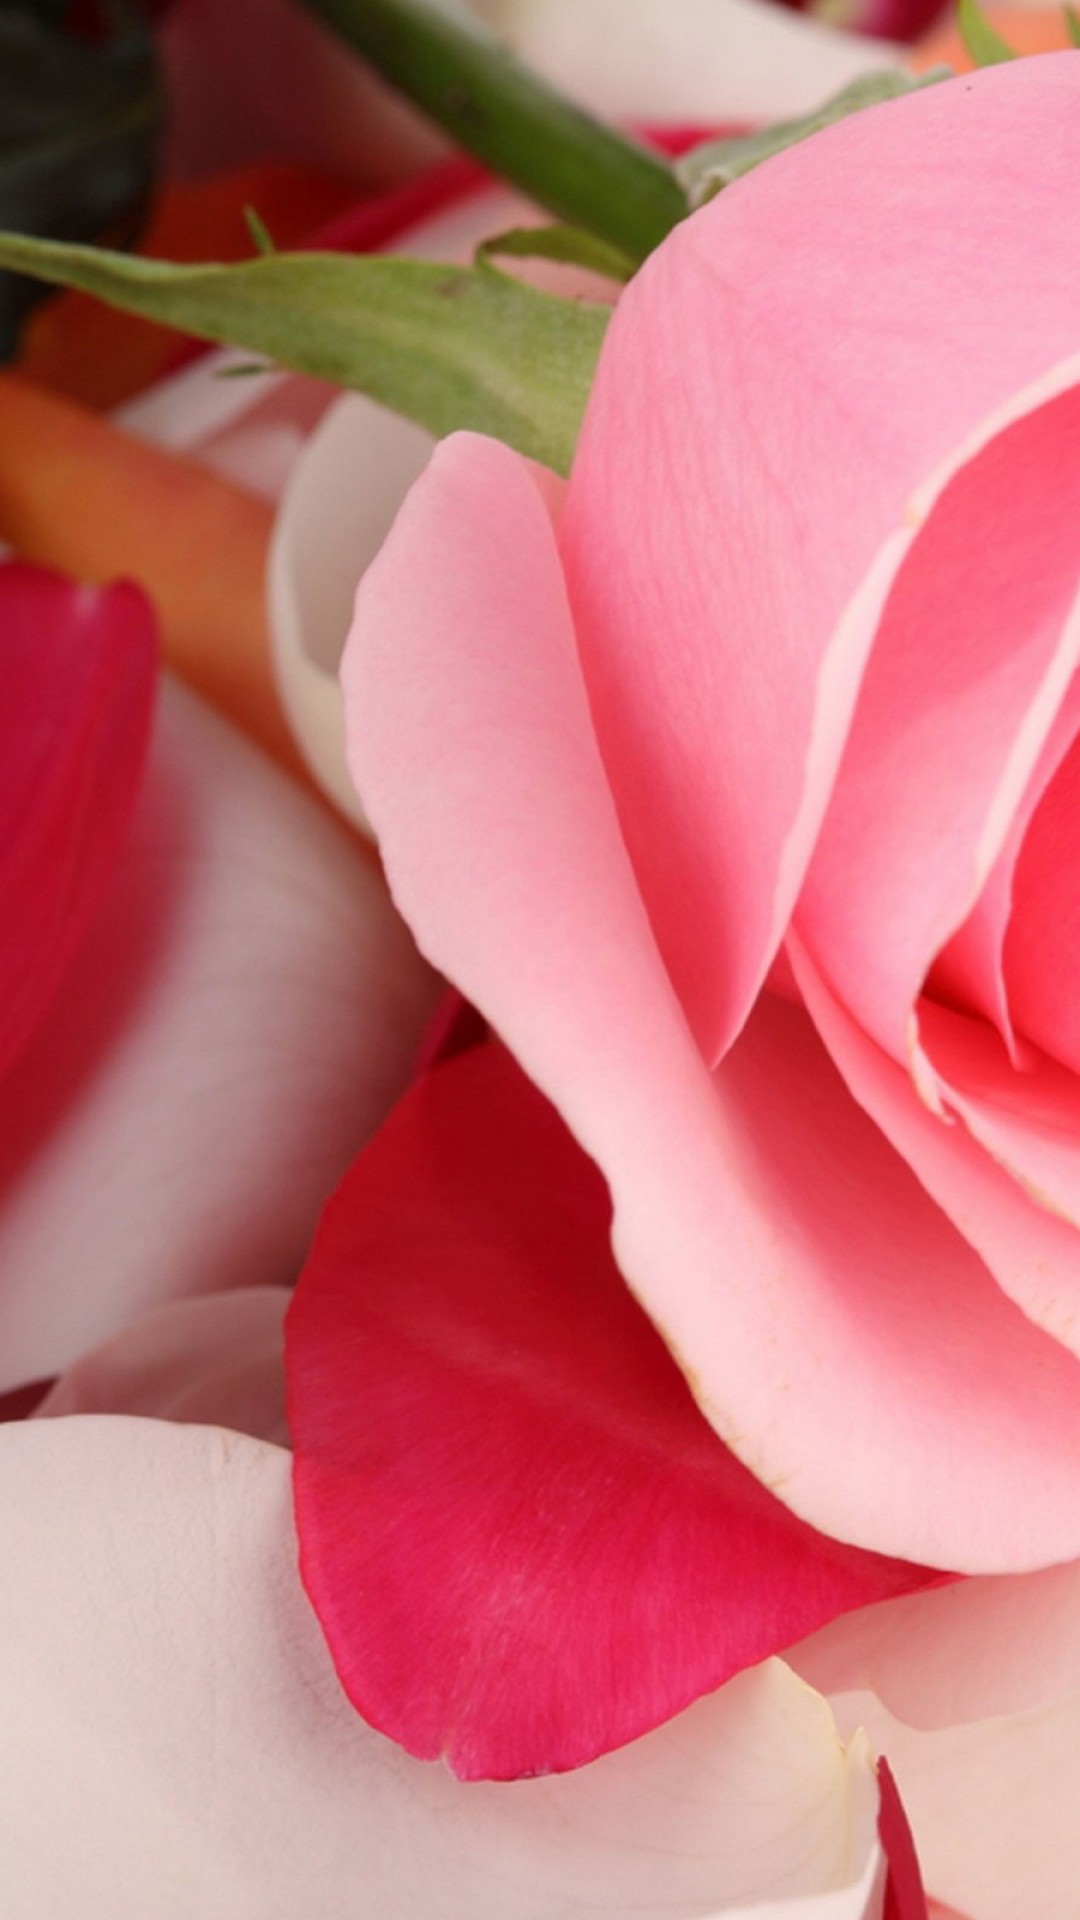 Beautiful Rose Flower Wallpaper for Desktop and Mobiles iPhone 6 / 6S Plus  - HD Wallpaper 